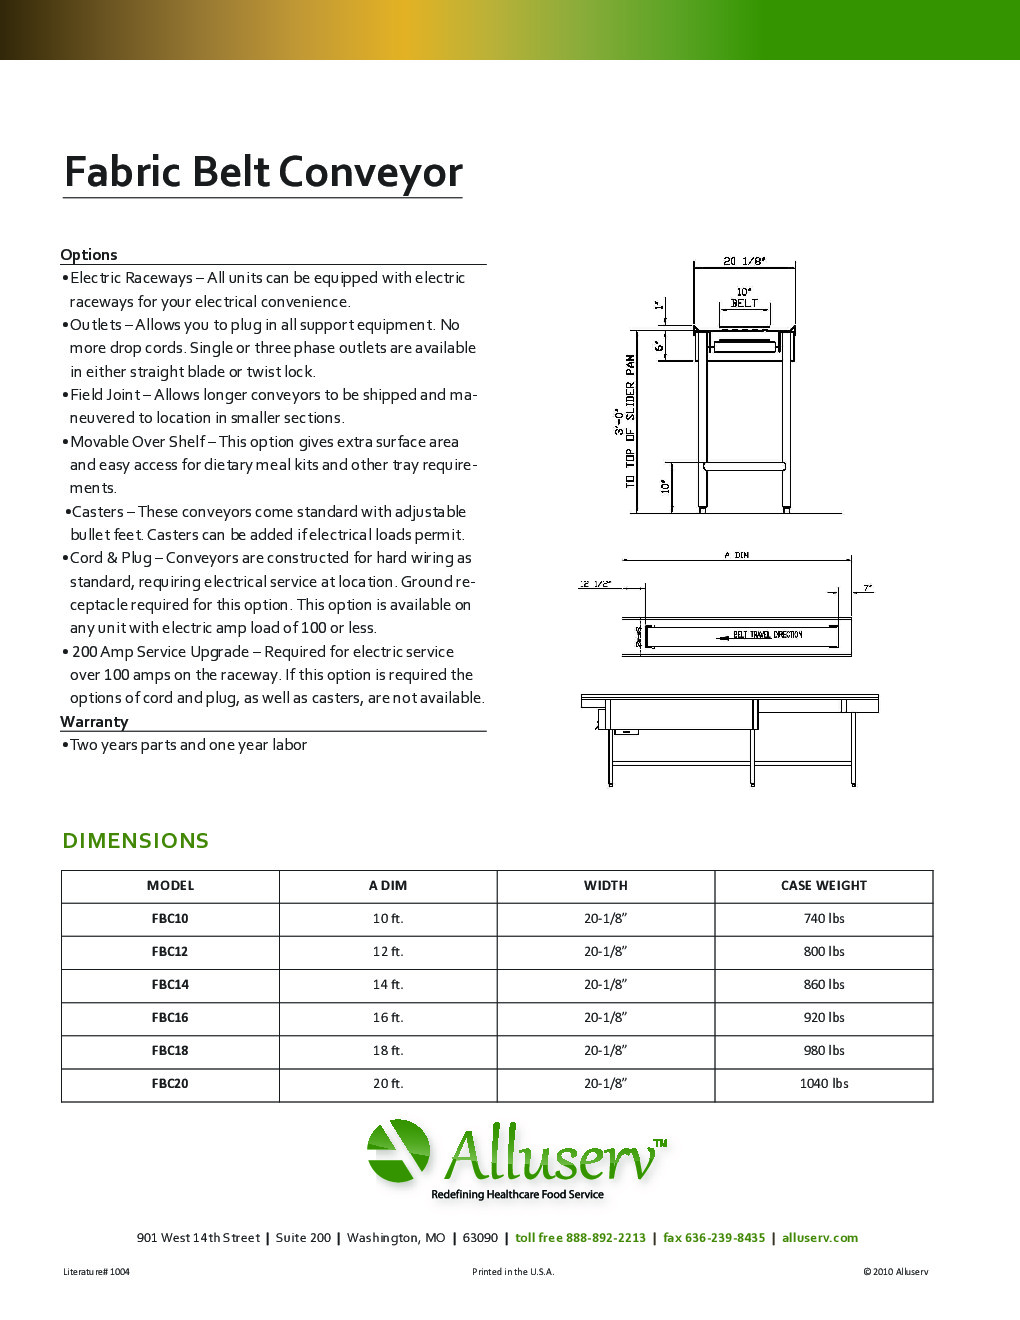 Alluserv FBC16 Tray Make-Up Conveyor